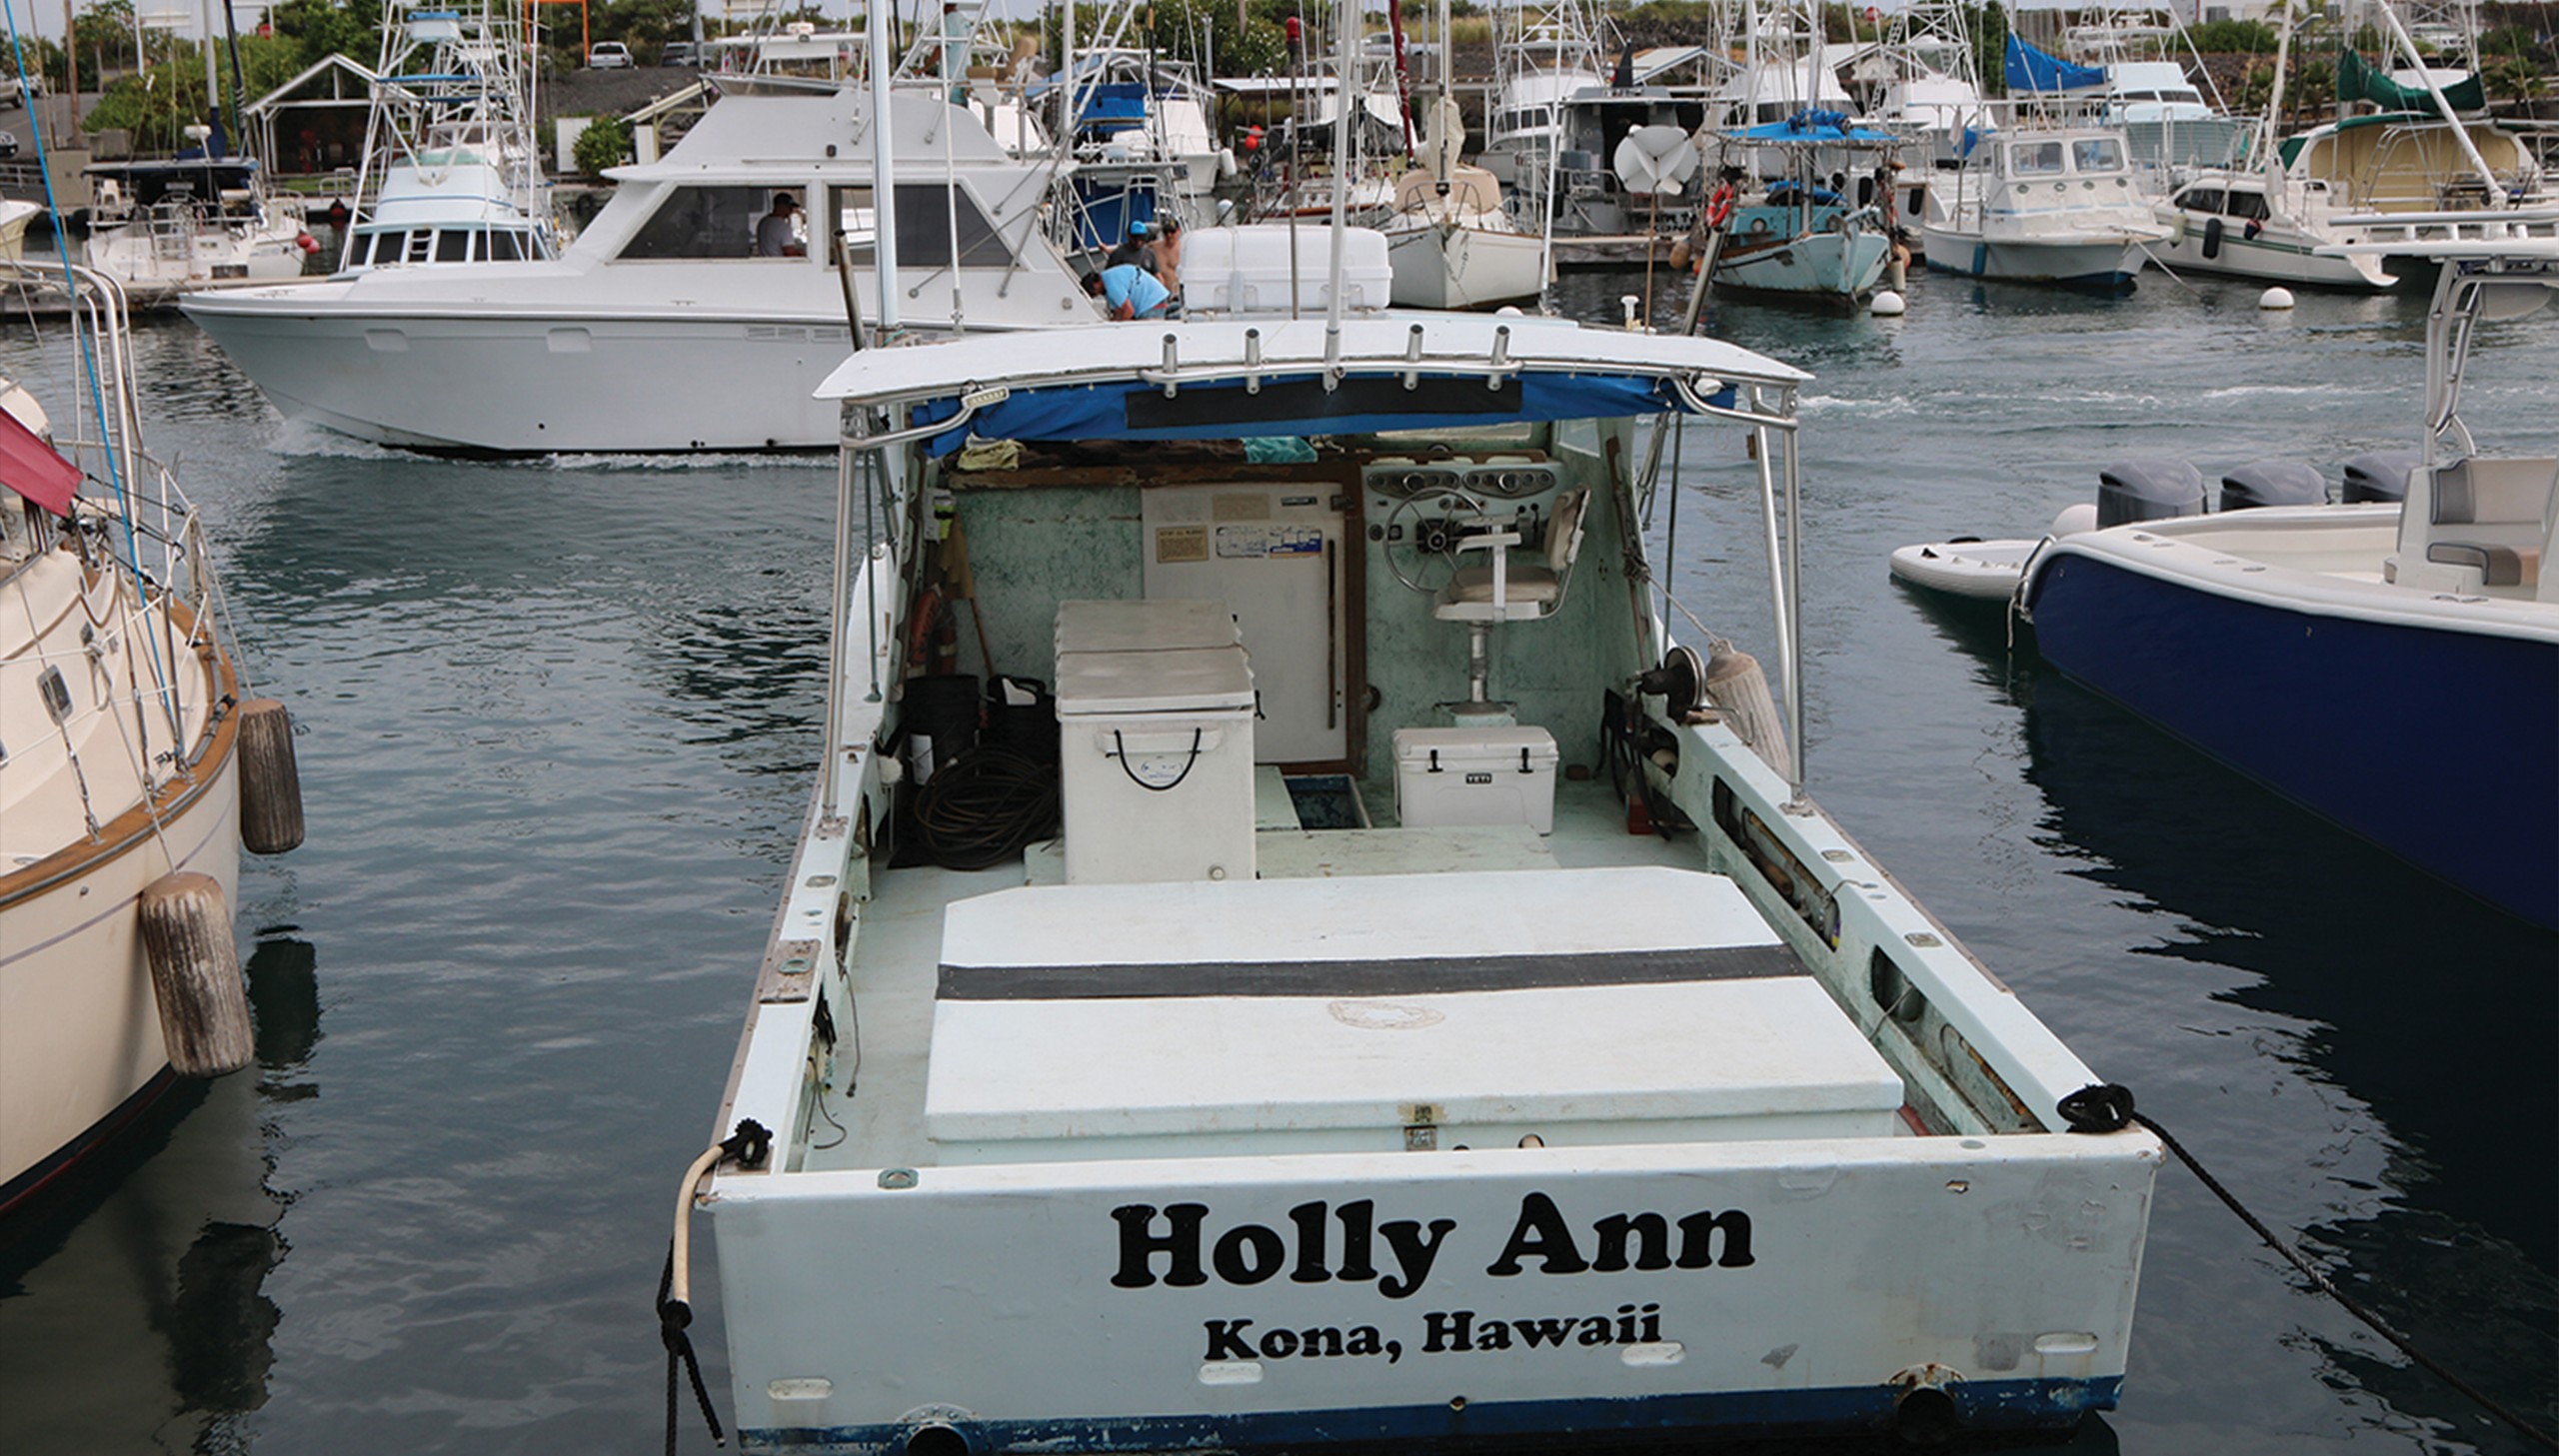 Holly Ann boat sitting in the Kona Hawaii marina